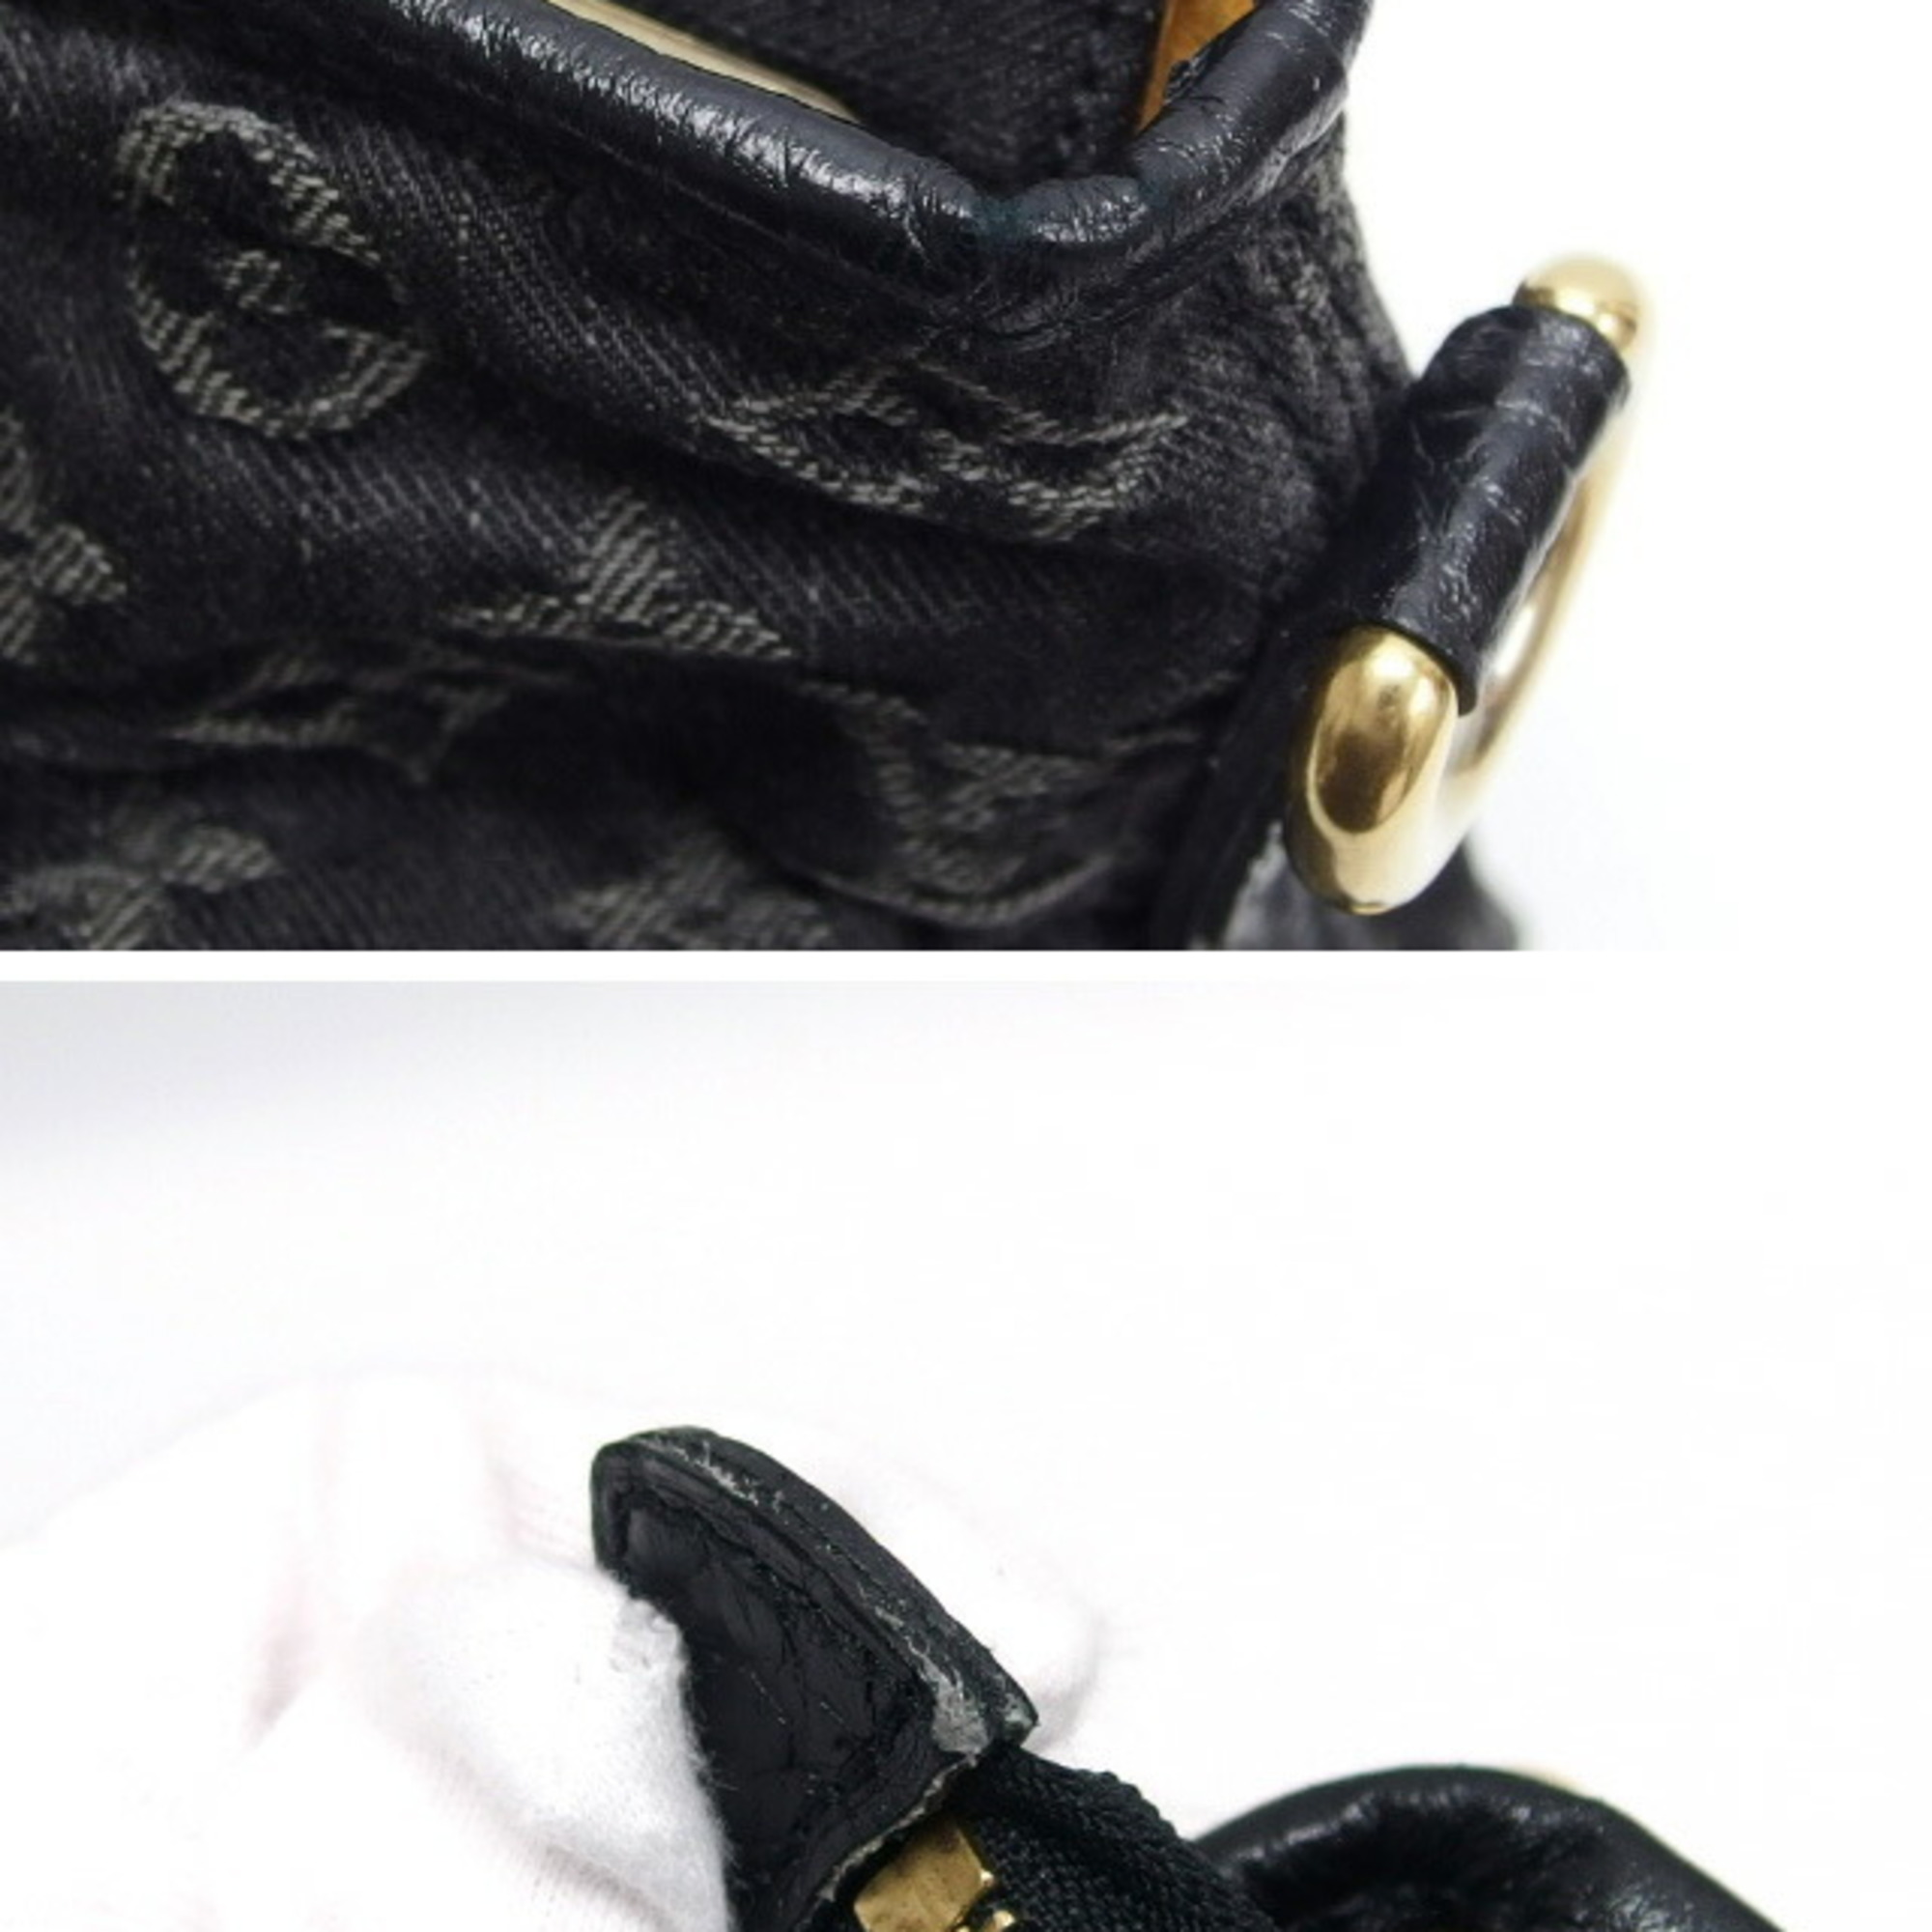 Louis Vuitton Monogram Denim Neo Cavi MM Handbag Noir (Black)